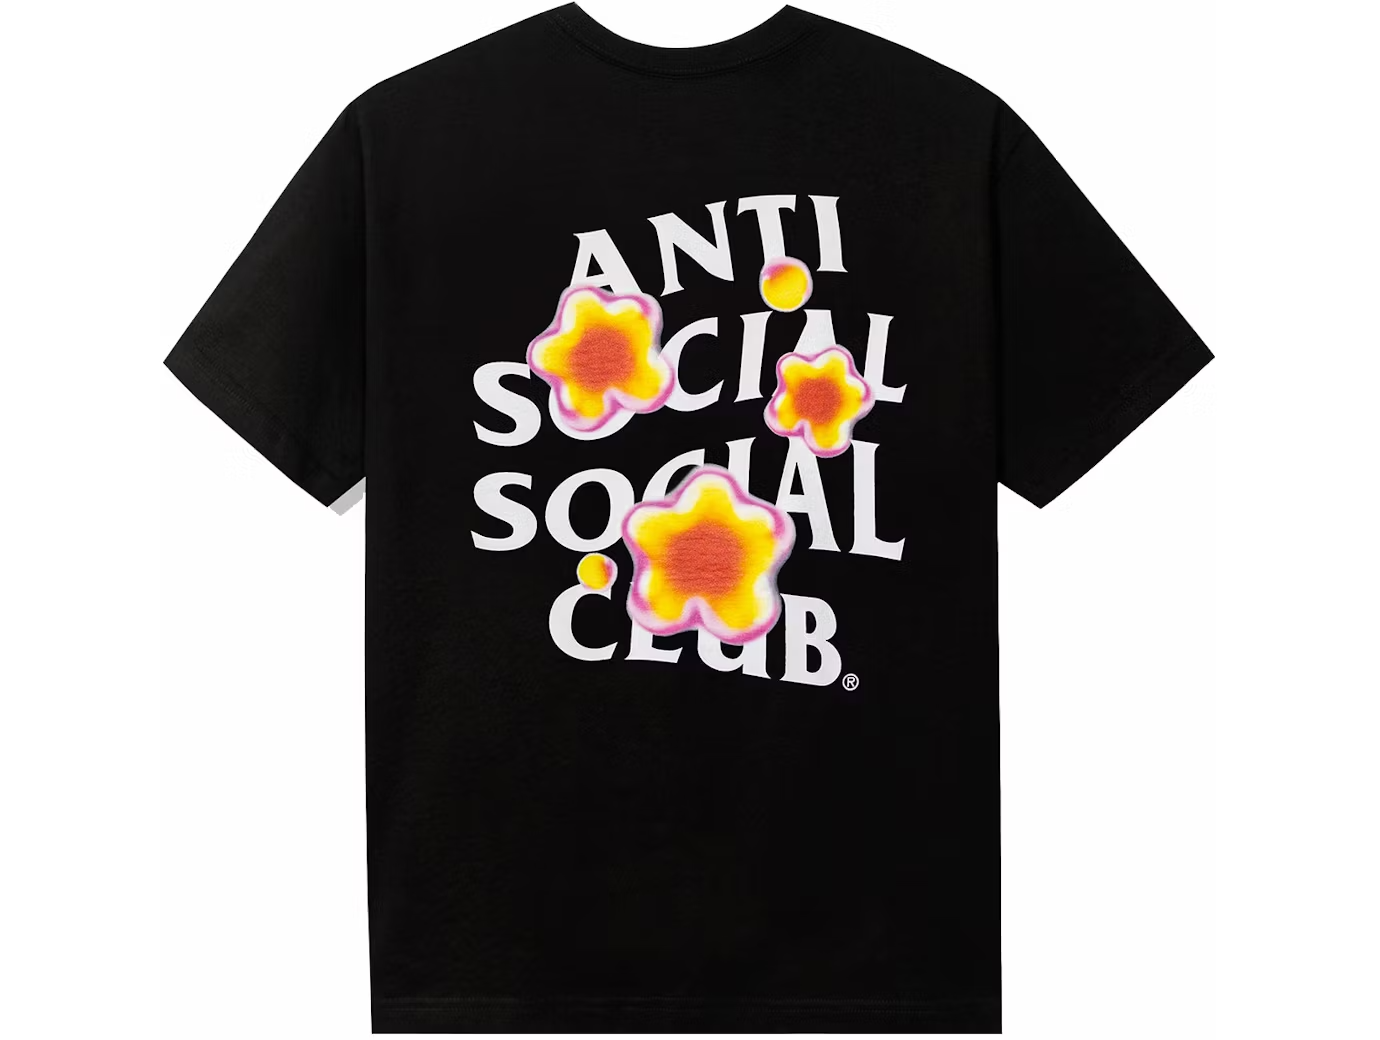 Anti Social Social Club What Happened Tee Black